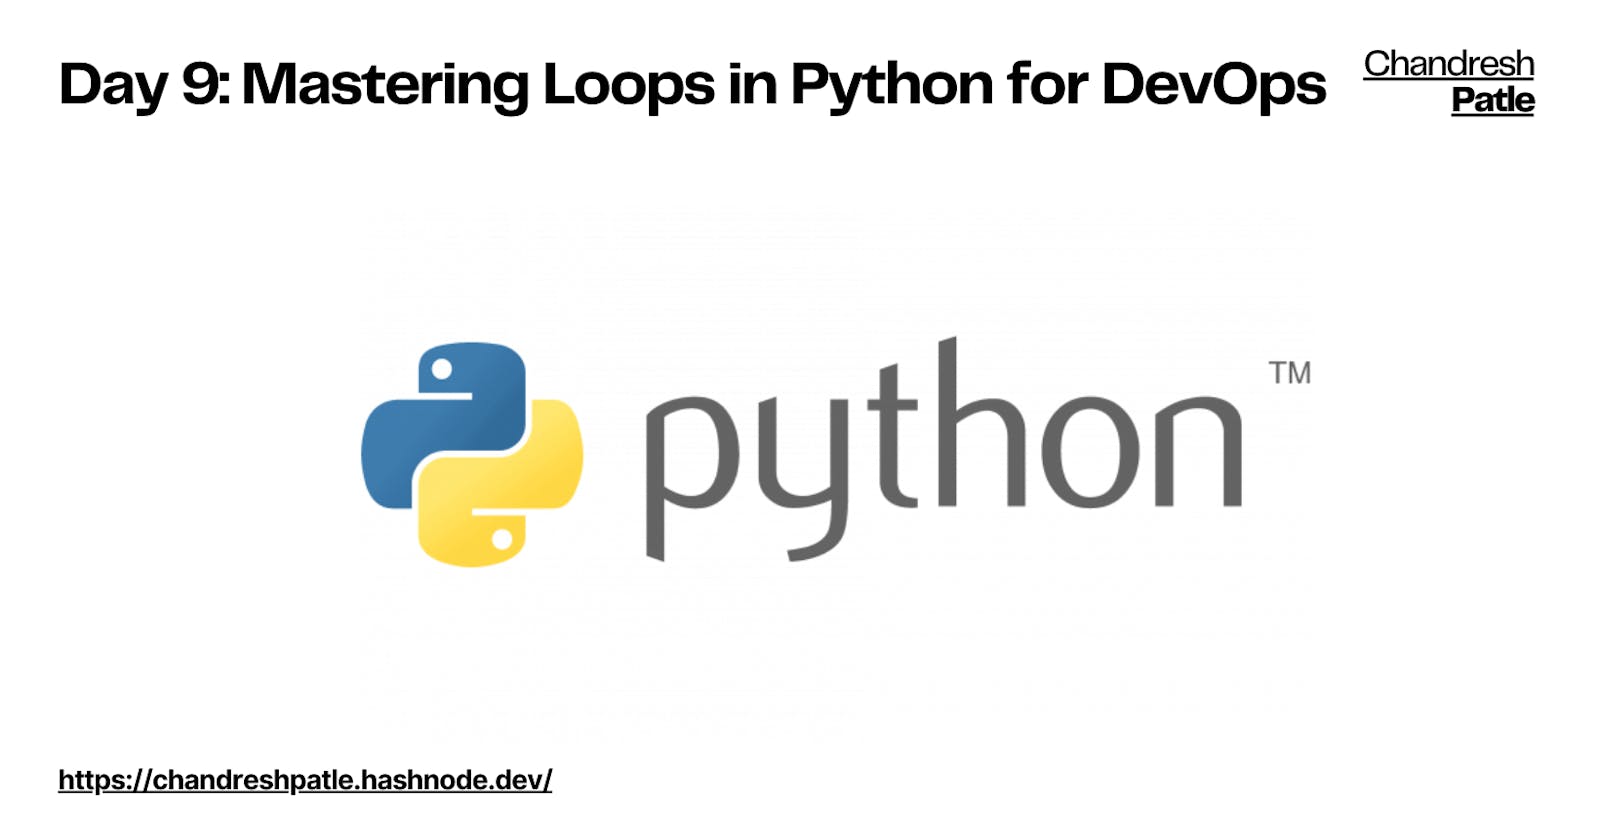 Day 9: Mastering Loops in Python for DevOps